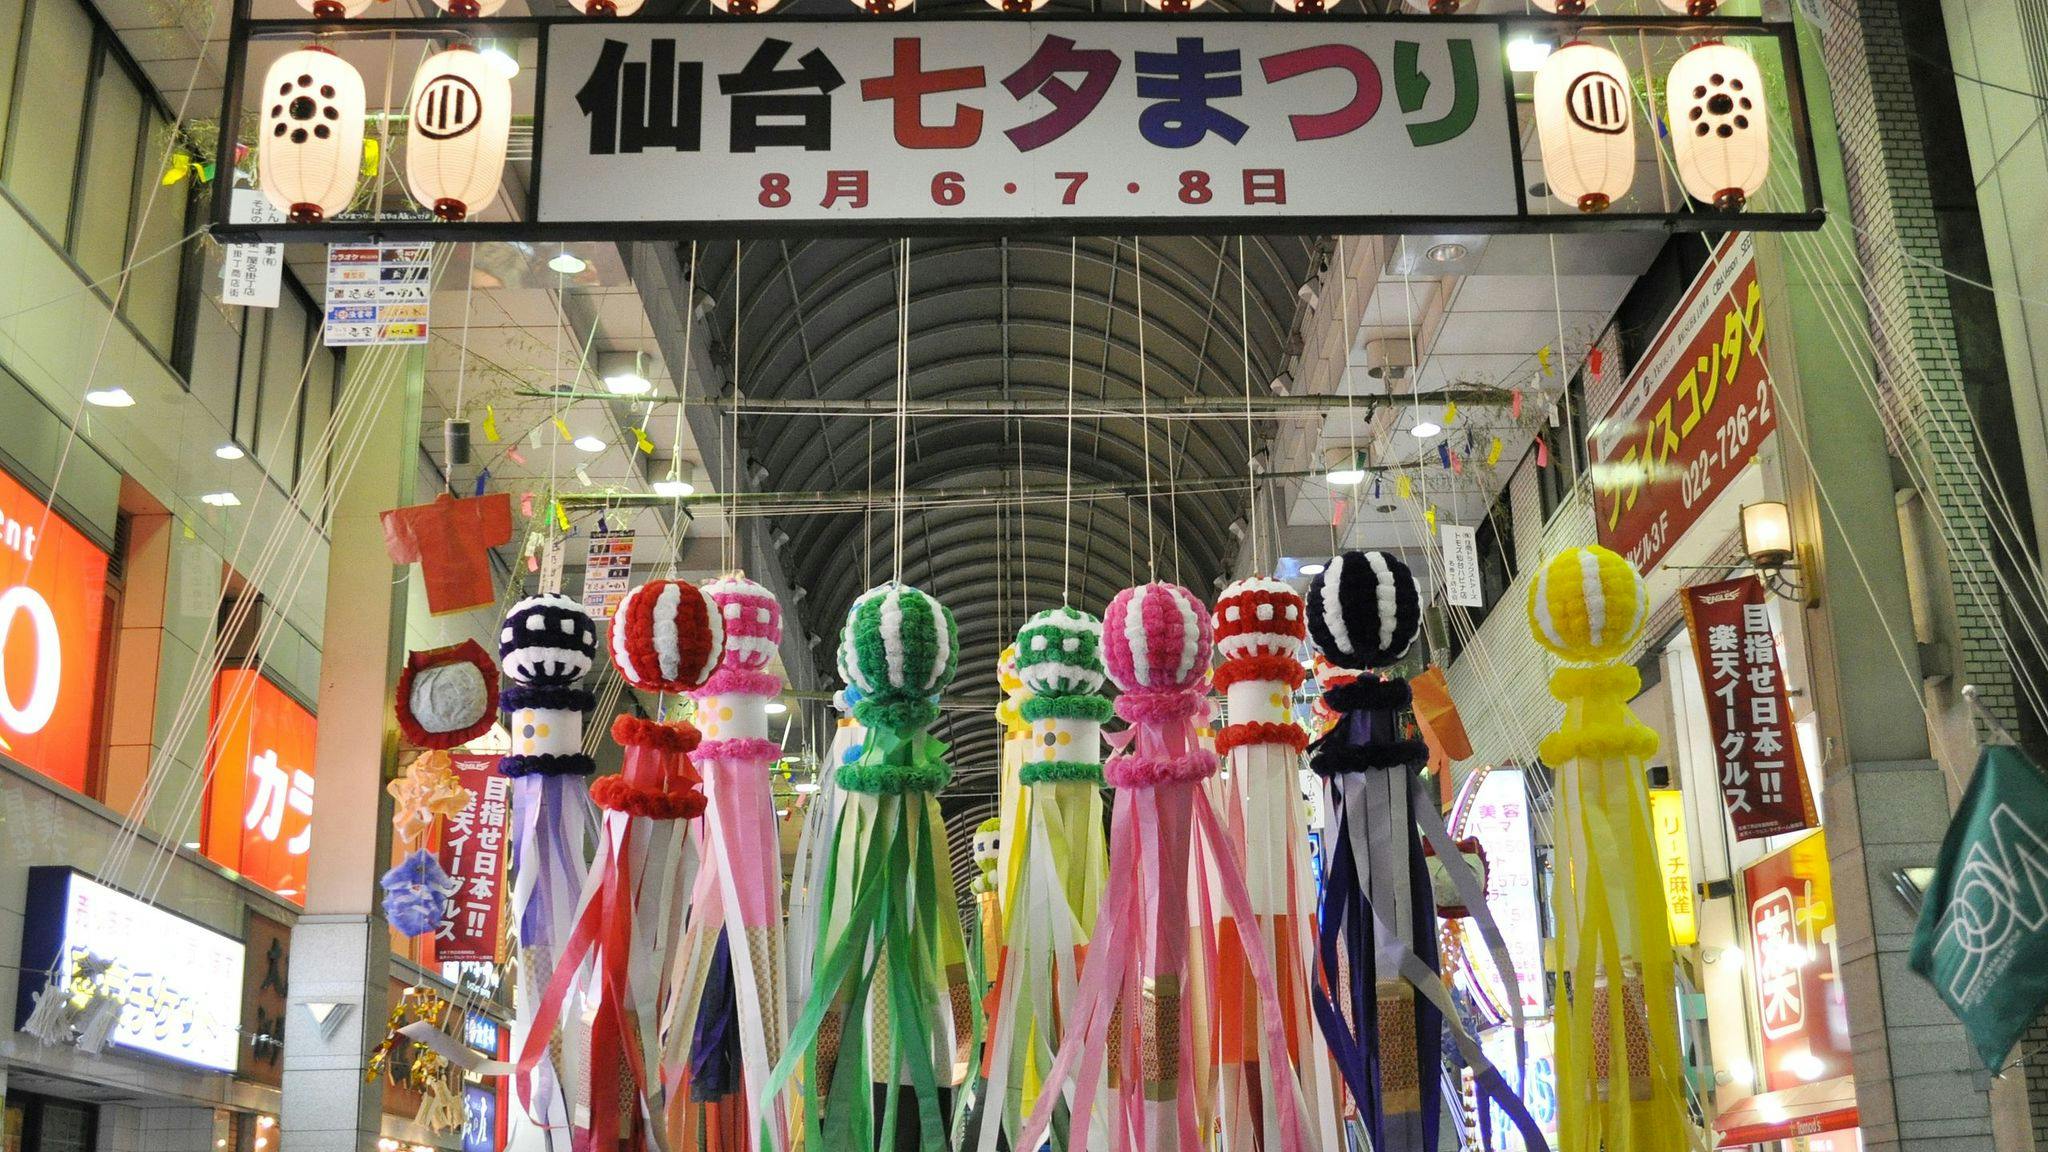 Tanabata festival decorations on the streets of Sendai